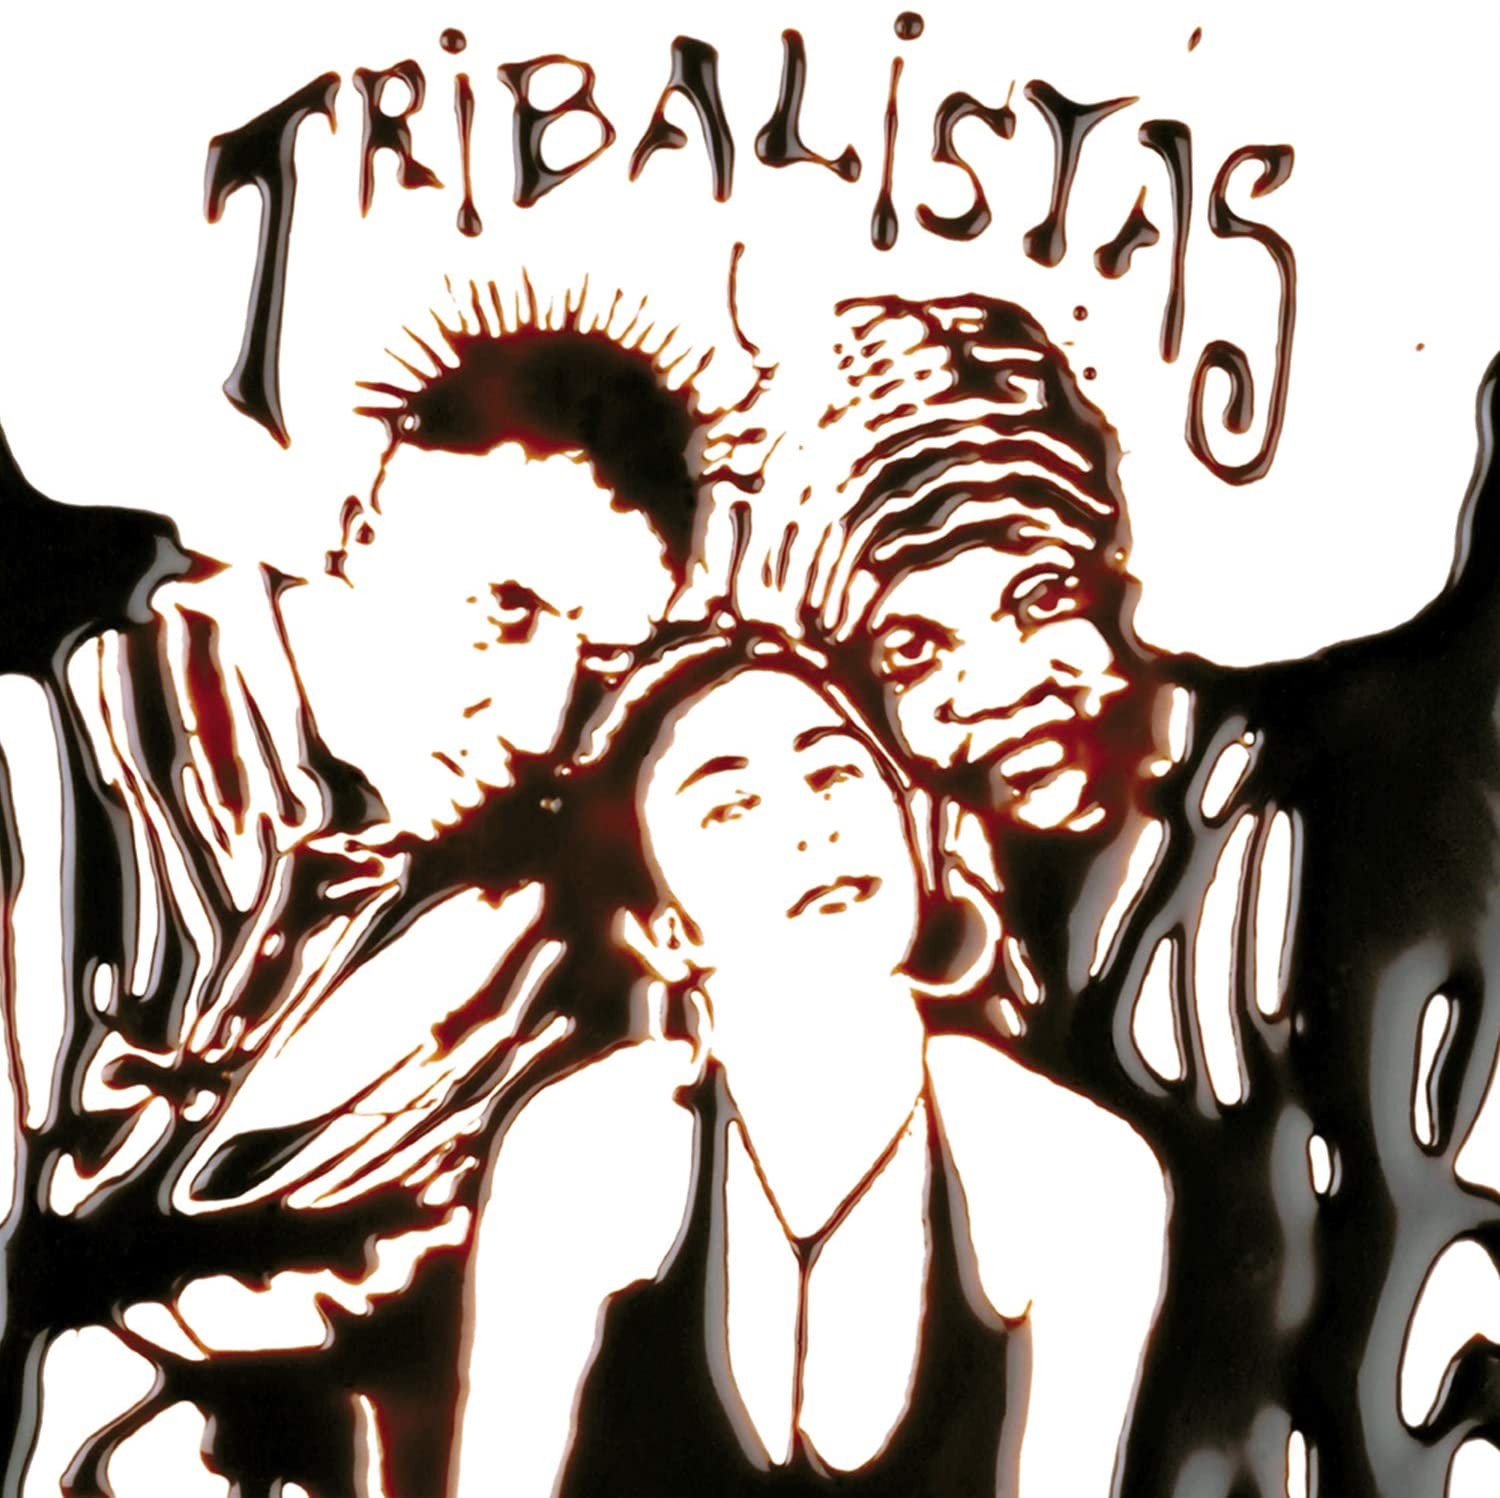 Disco de vinil dos Tribalistas, projeto de Arnaldo Antunes, Carlinhos Brown e Marisa Monte (Foto: Amazon/Reprodução)